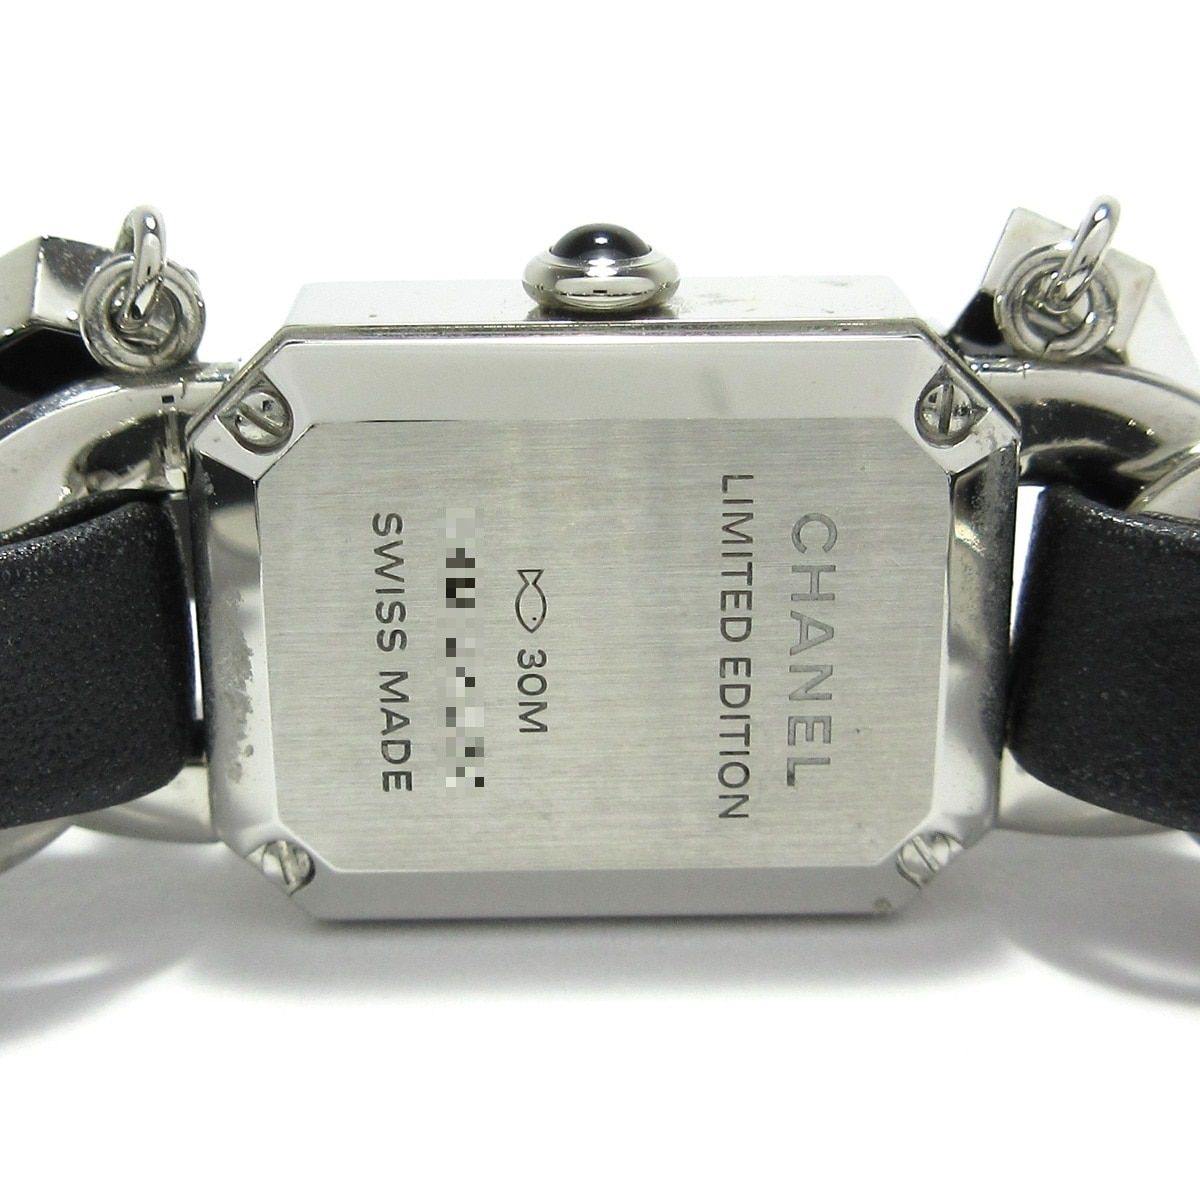 CHANEL(シャネル) 腕時計 プルミエール ウォンテッド ドゥ シャネル H7471 レディース SS/LIMITED EDITION/革ベルト 黒